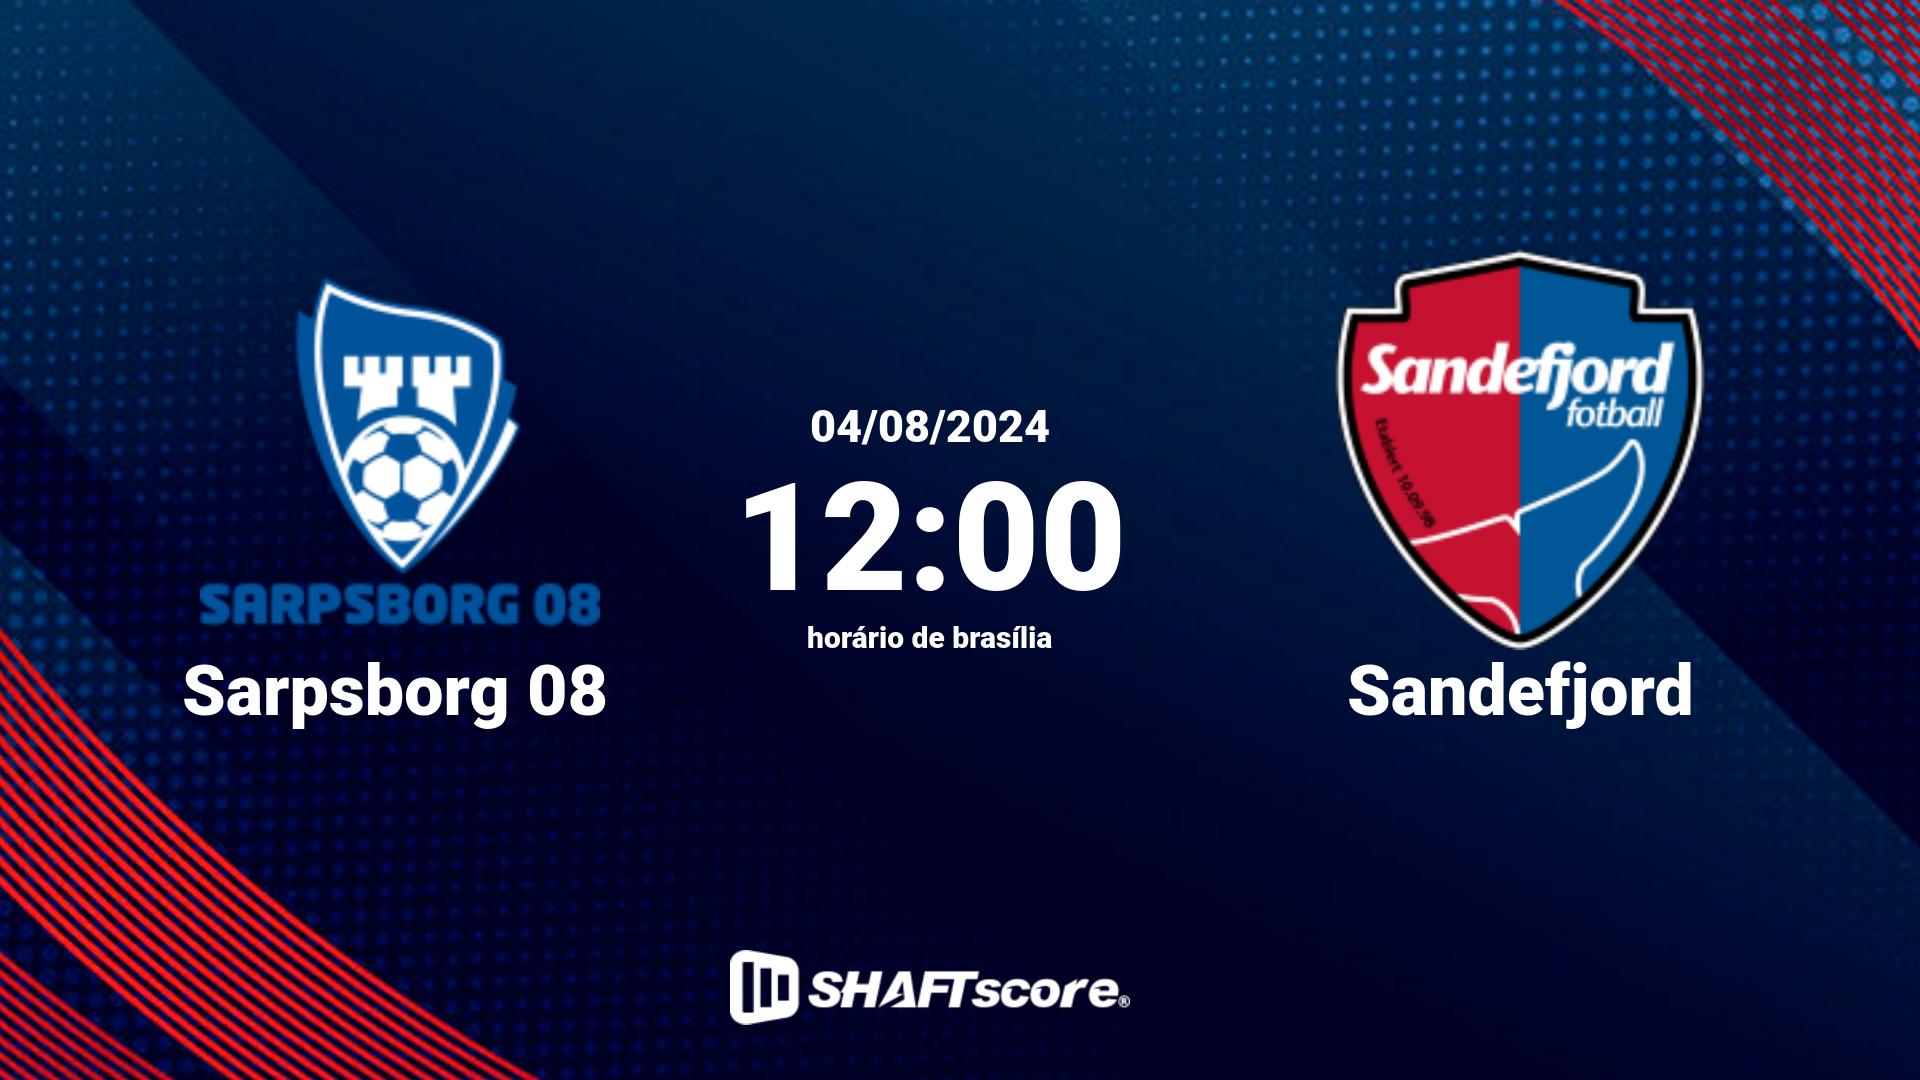 Estatísticas do jogo Sarpsborg 08 vs Sandefjord 04.08 12:00